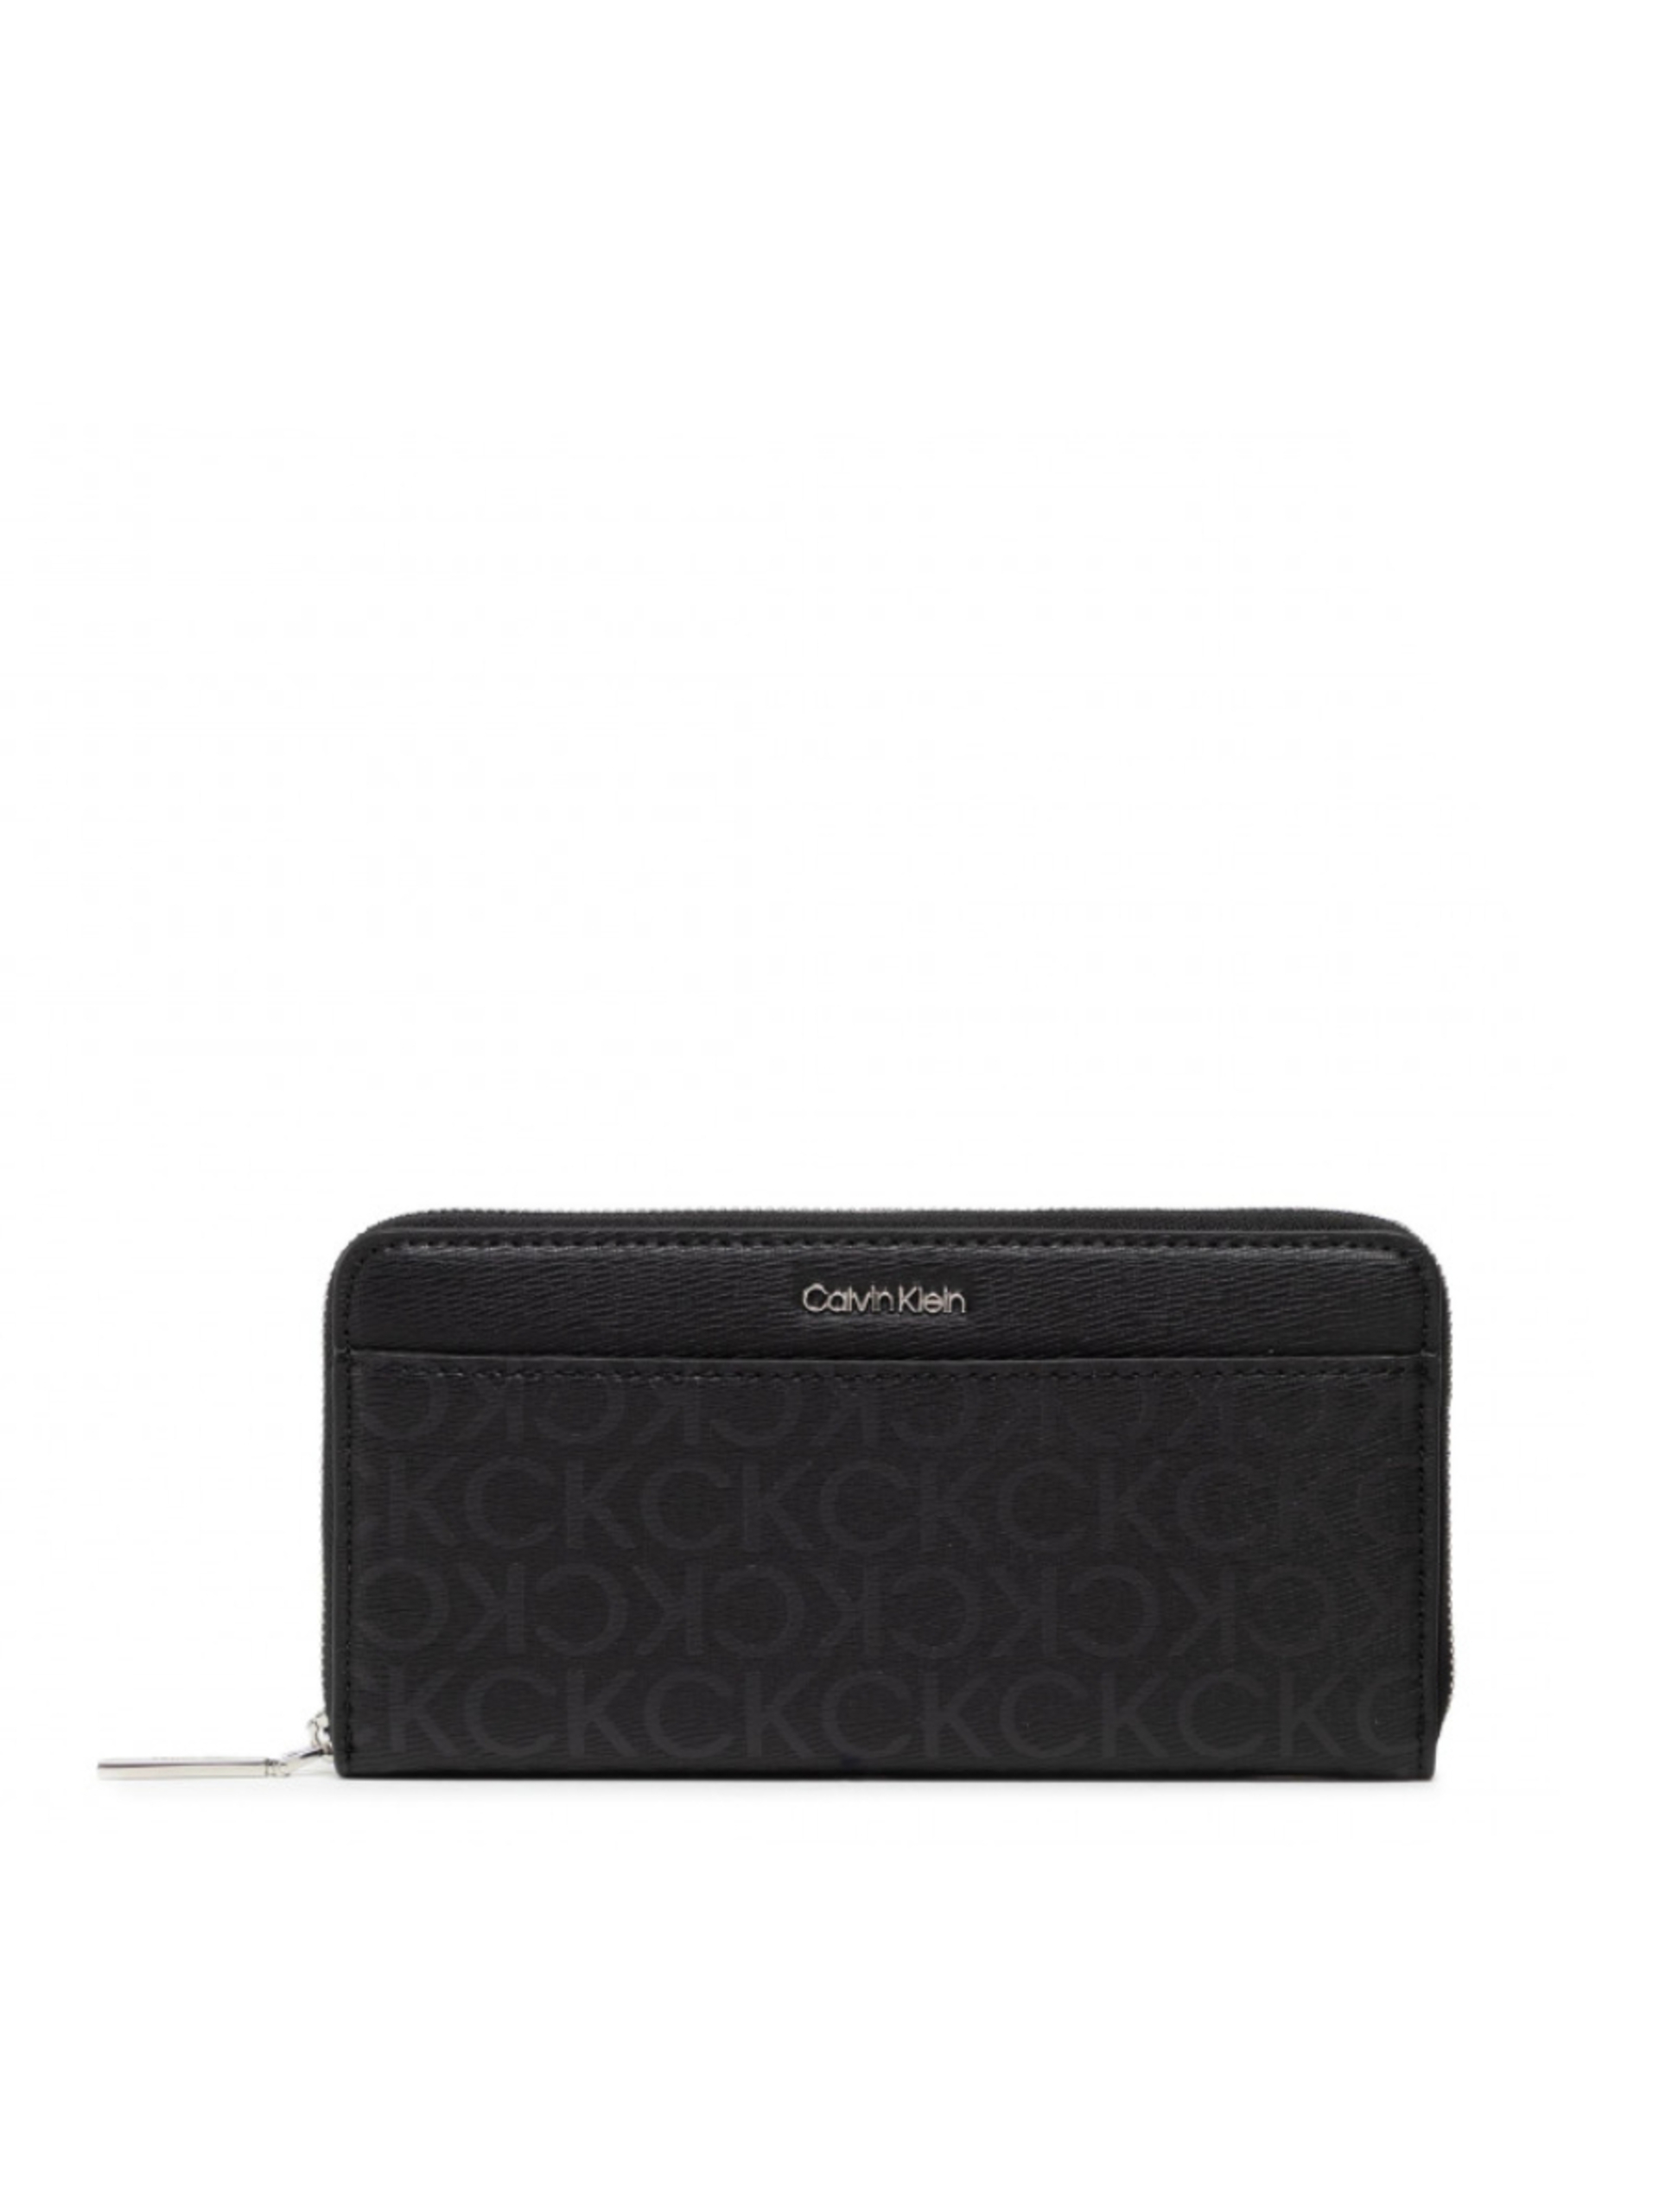 Calvin Klein dámská černá peněženka - OS (0GJ)